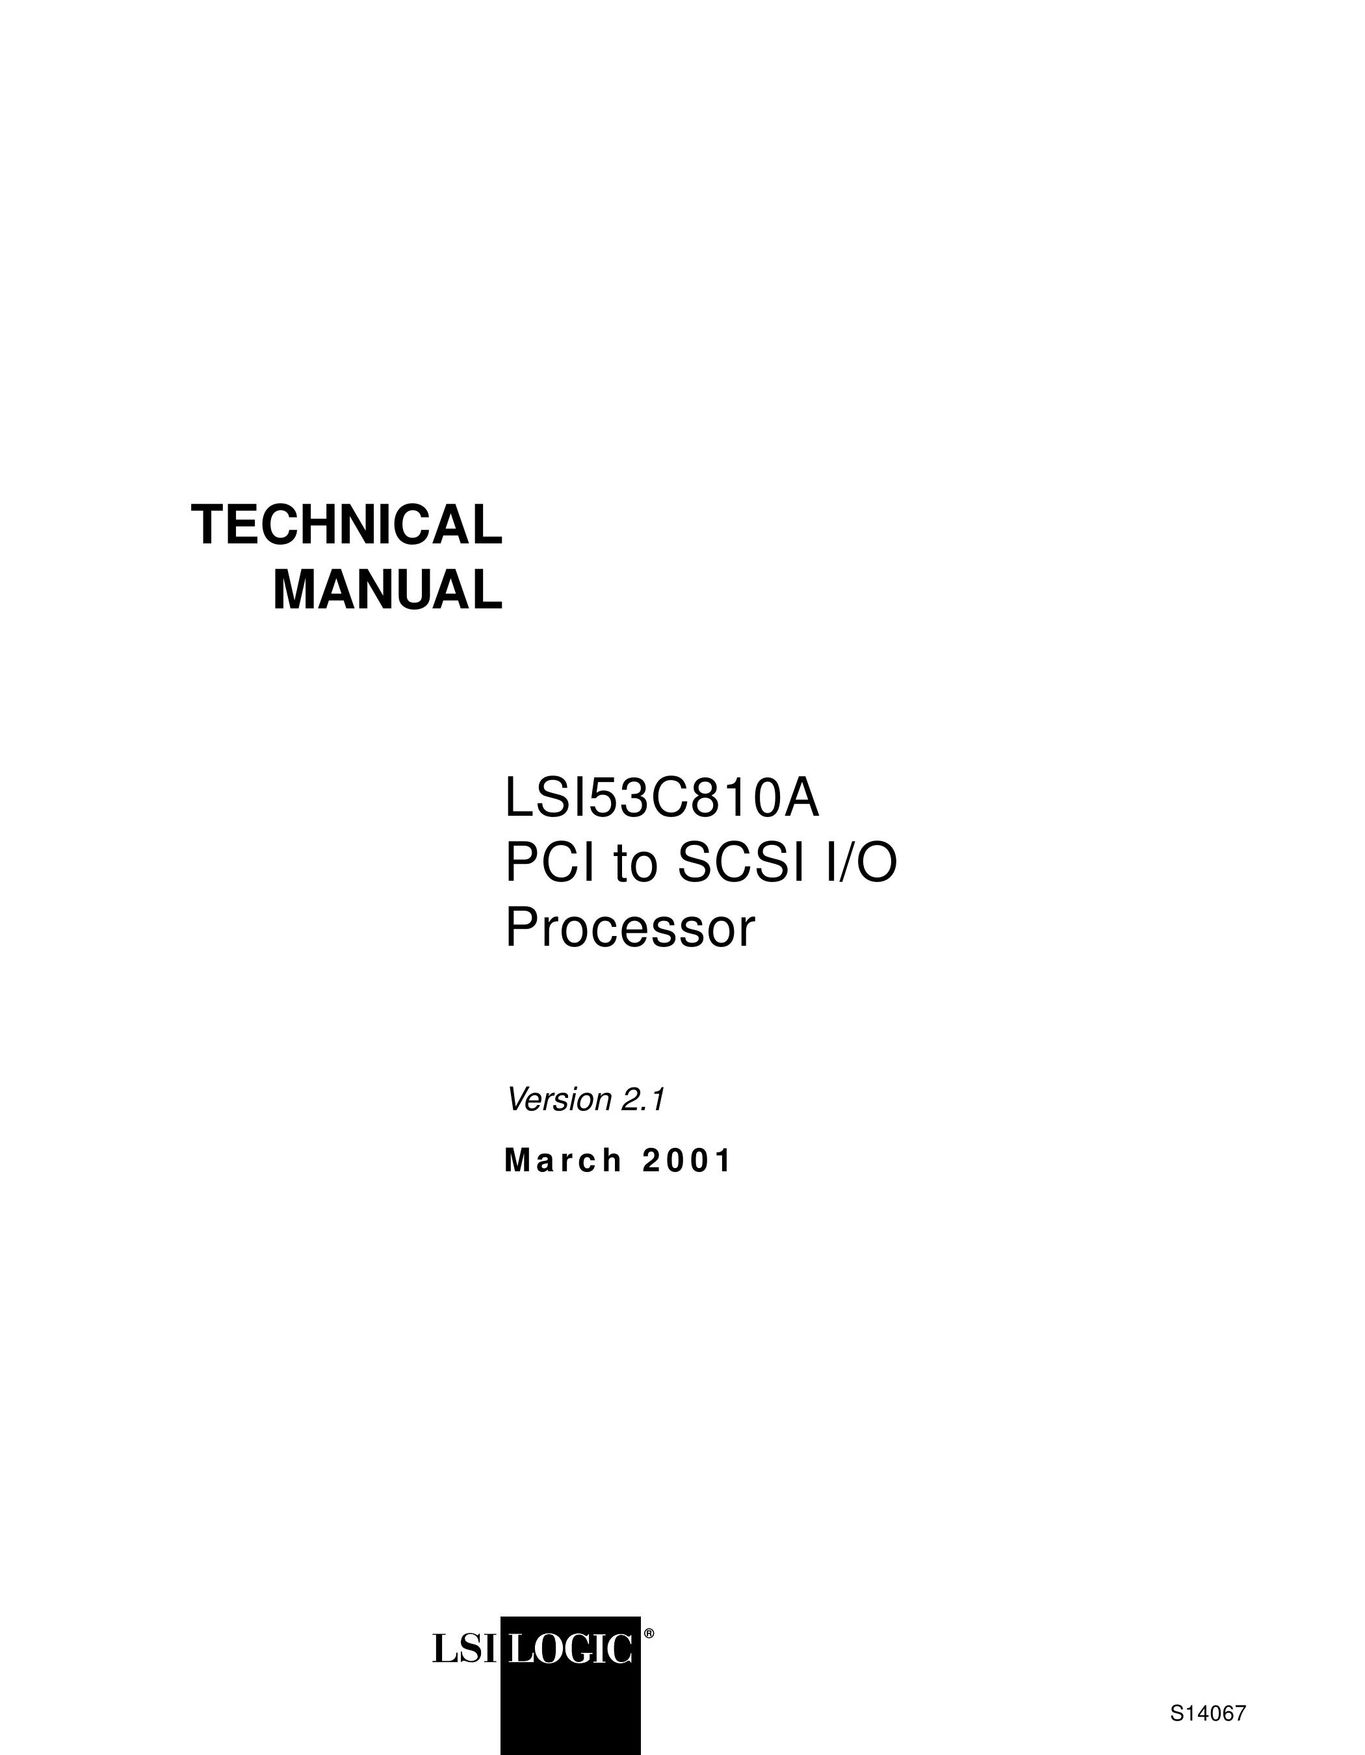 LSI 53C810A Computer Hardware User Manual